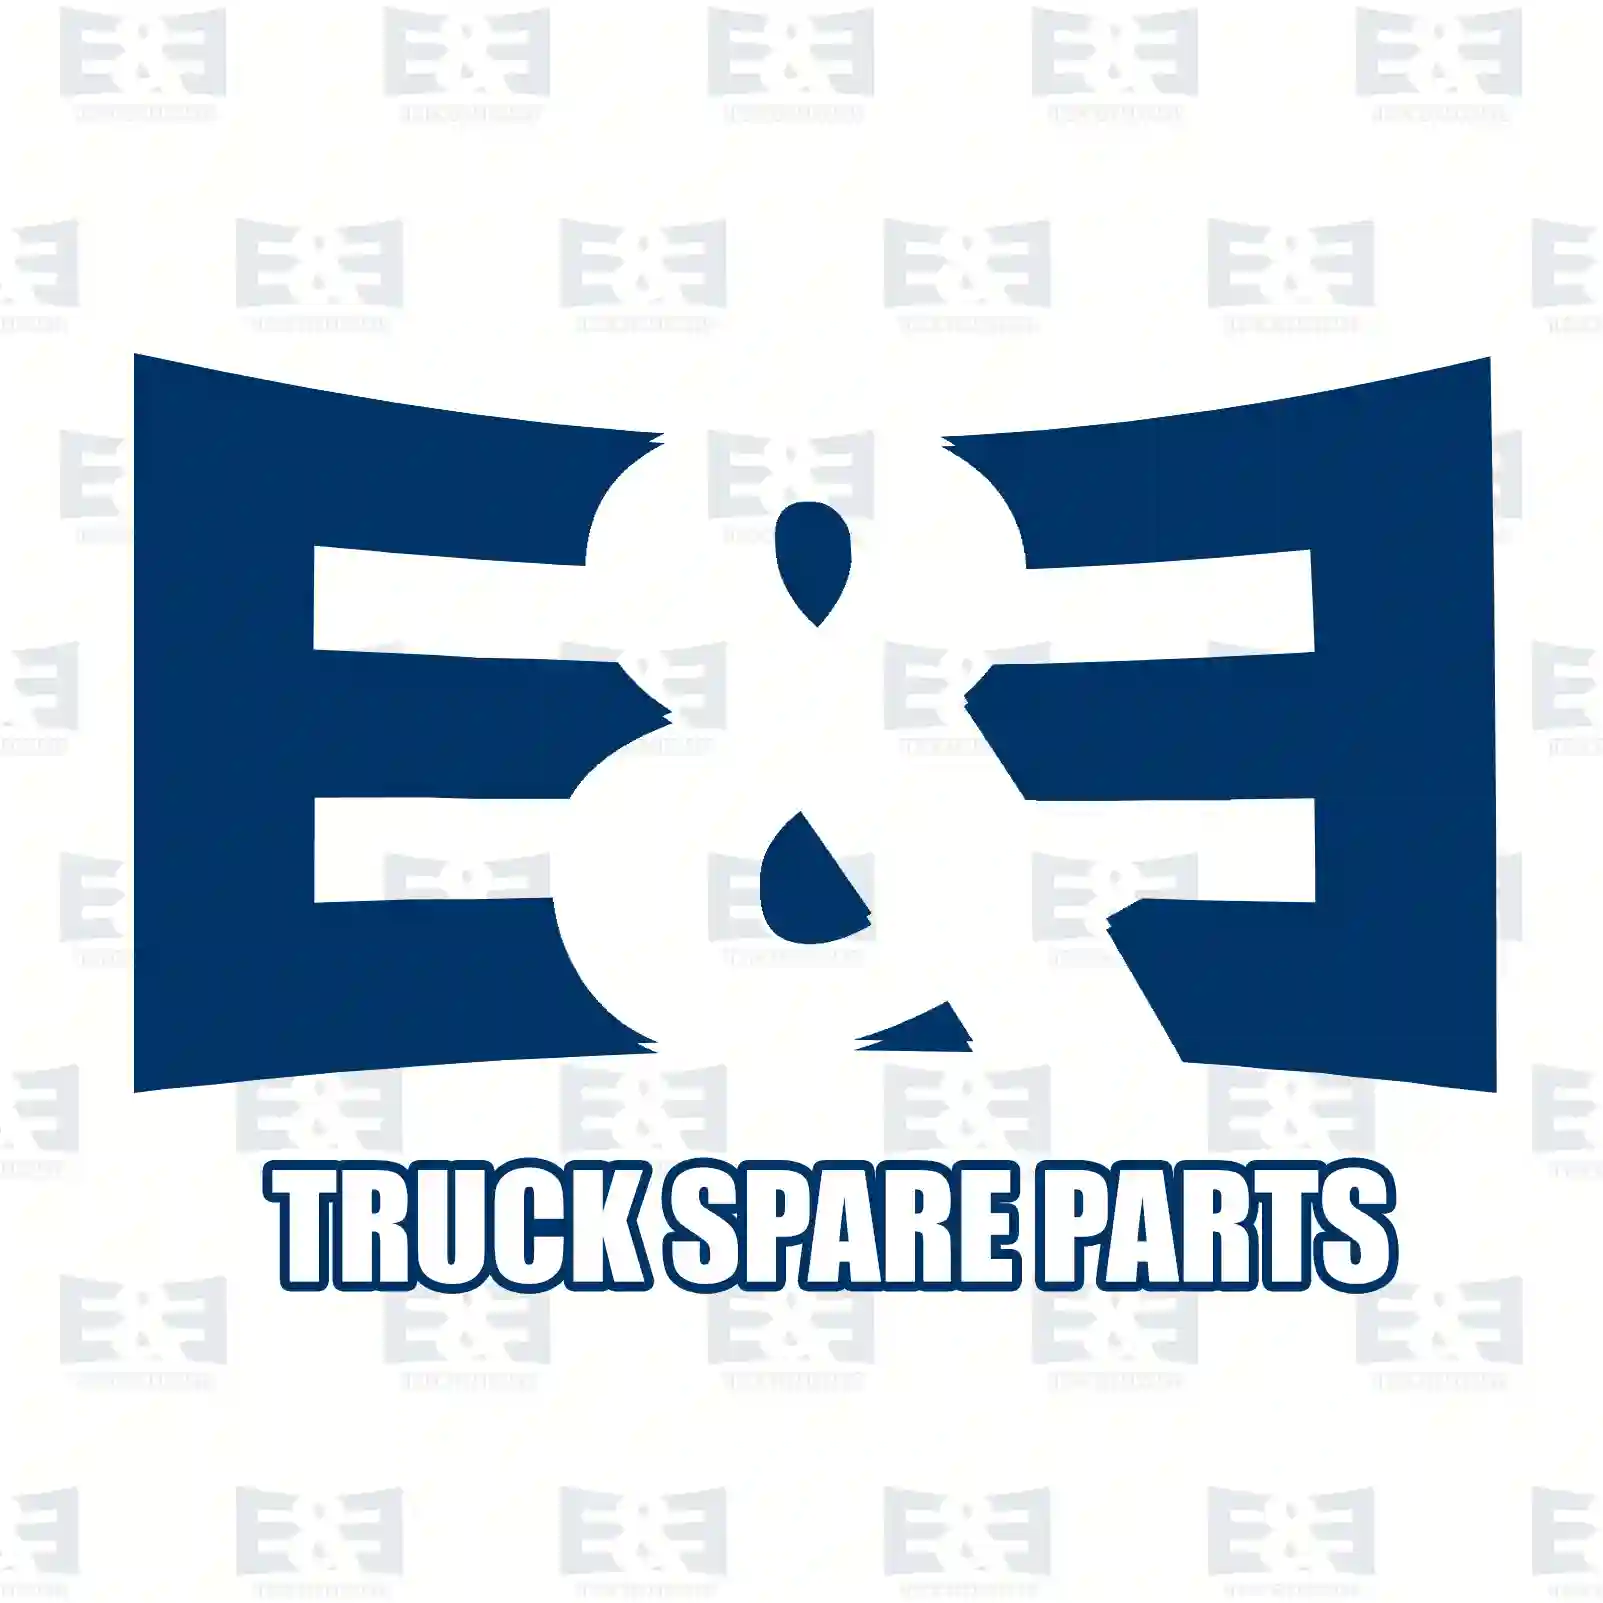 Ball bearing, 2E2203803, 33411123415, 33411468927, 90235281, 51934100073, 51934100078, 51934100079, 51934100119, 51934100120, 51934100123, 51934100128, 51934100154, 415203, ZG40199-0008 ||  2E2203803 E&E Truck Spare Parts | Truck Spare Parts, Auotomotive Spare Parts Ball bearing, 2E2203803, 33411123415, 33411468927, 90235281, 51934100073, 51934100078, 51934100079, 51934100119, 51934100120, 51934100123, 51934100128, 51934100154, 415203, ZG40199-0008 ||  2E2203803 E&E Truck Spare Parts | Truck Spare Parts, Auotomotive Spare Parts